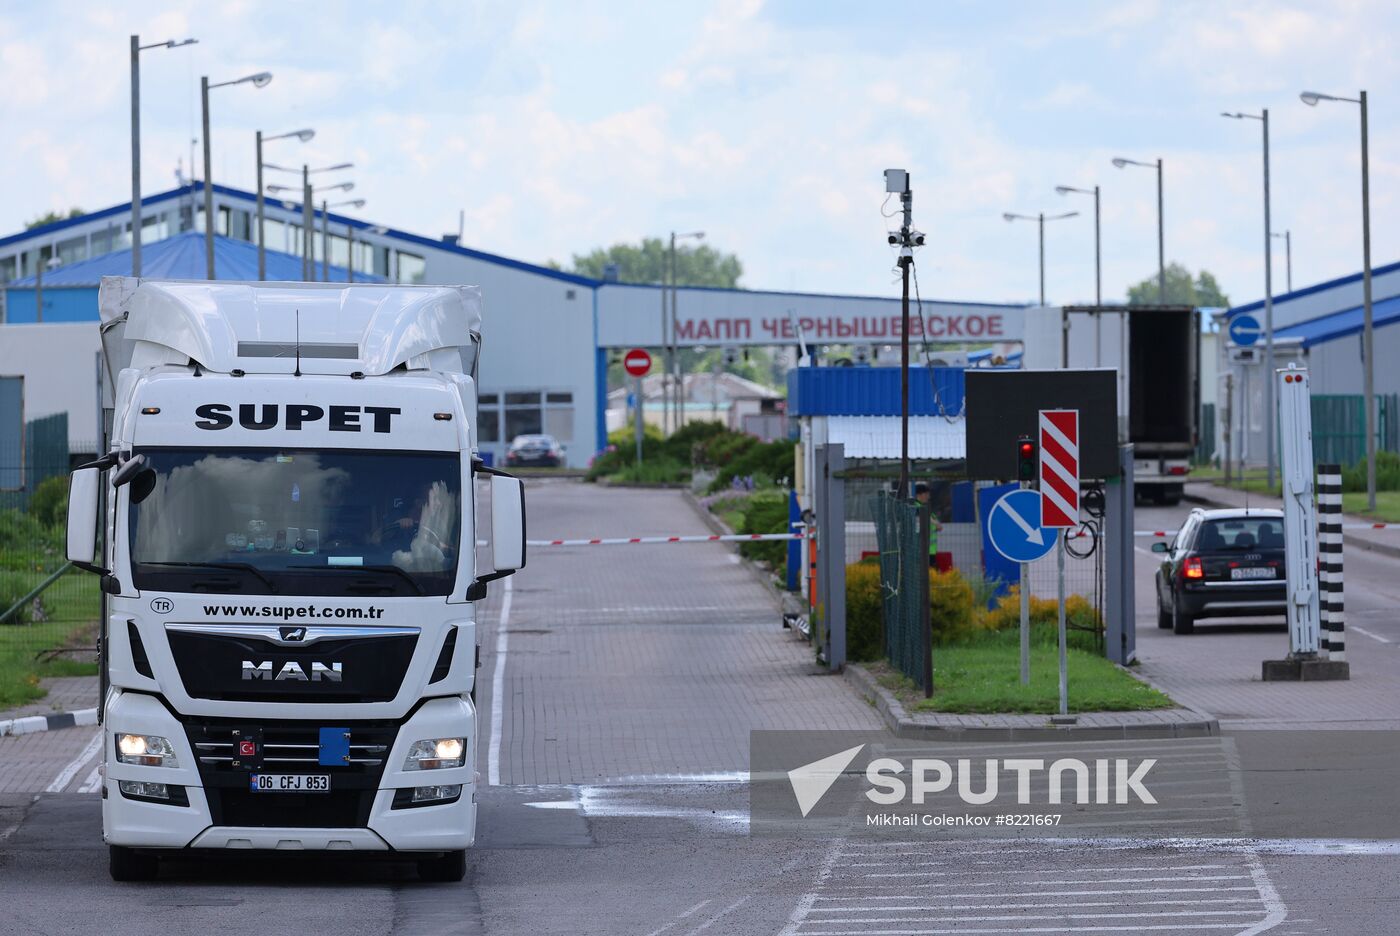 Russia Lithuania Truck Traffic Ban